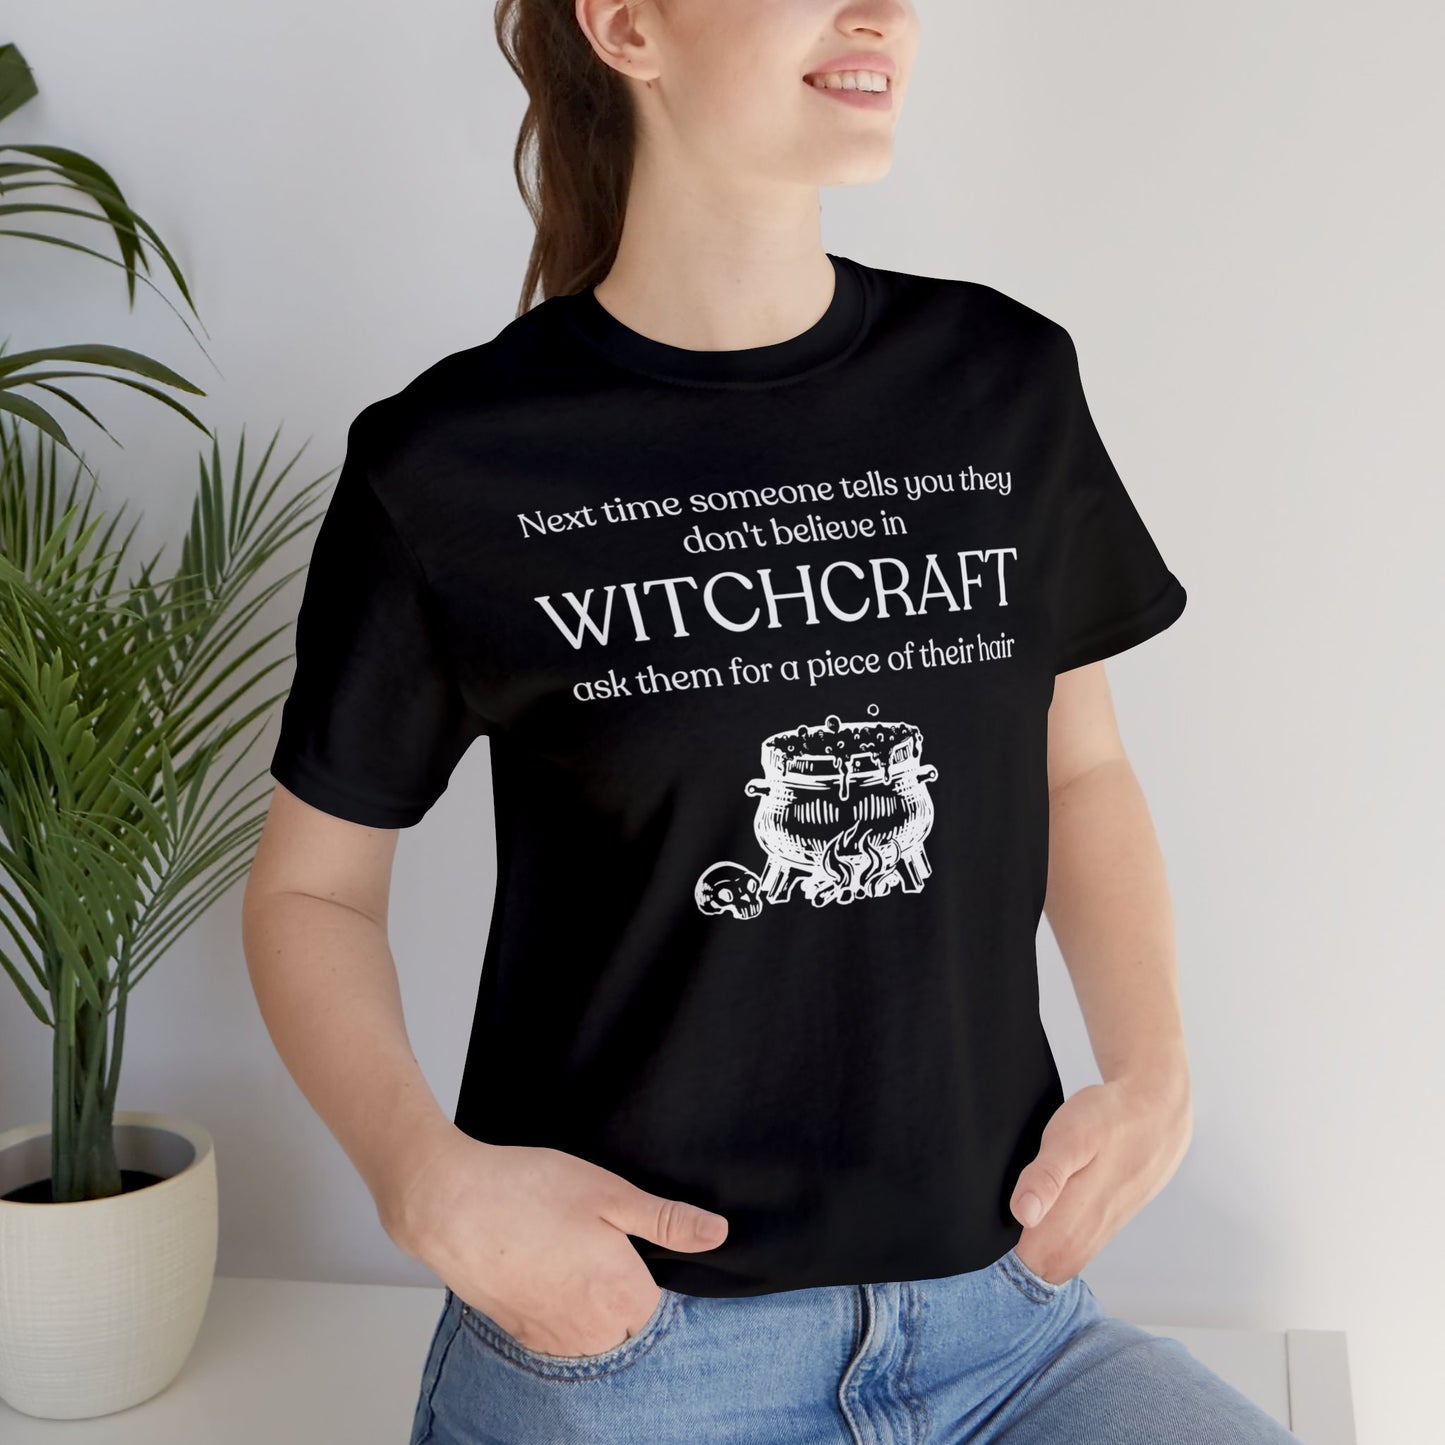 Believe in Witchcraft Tee